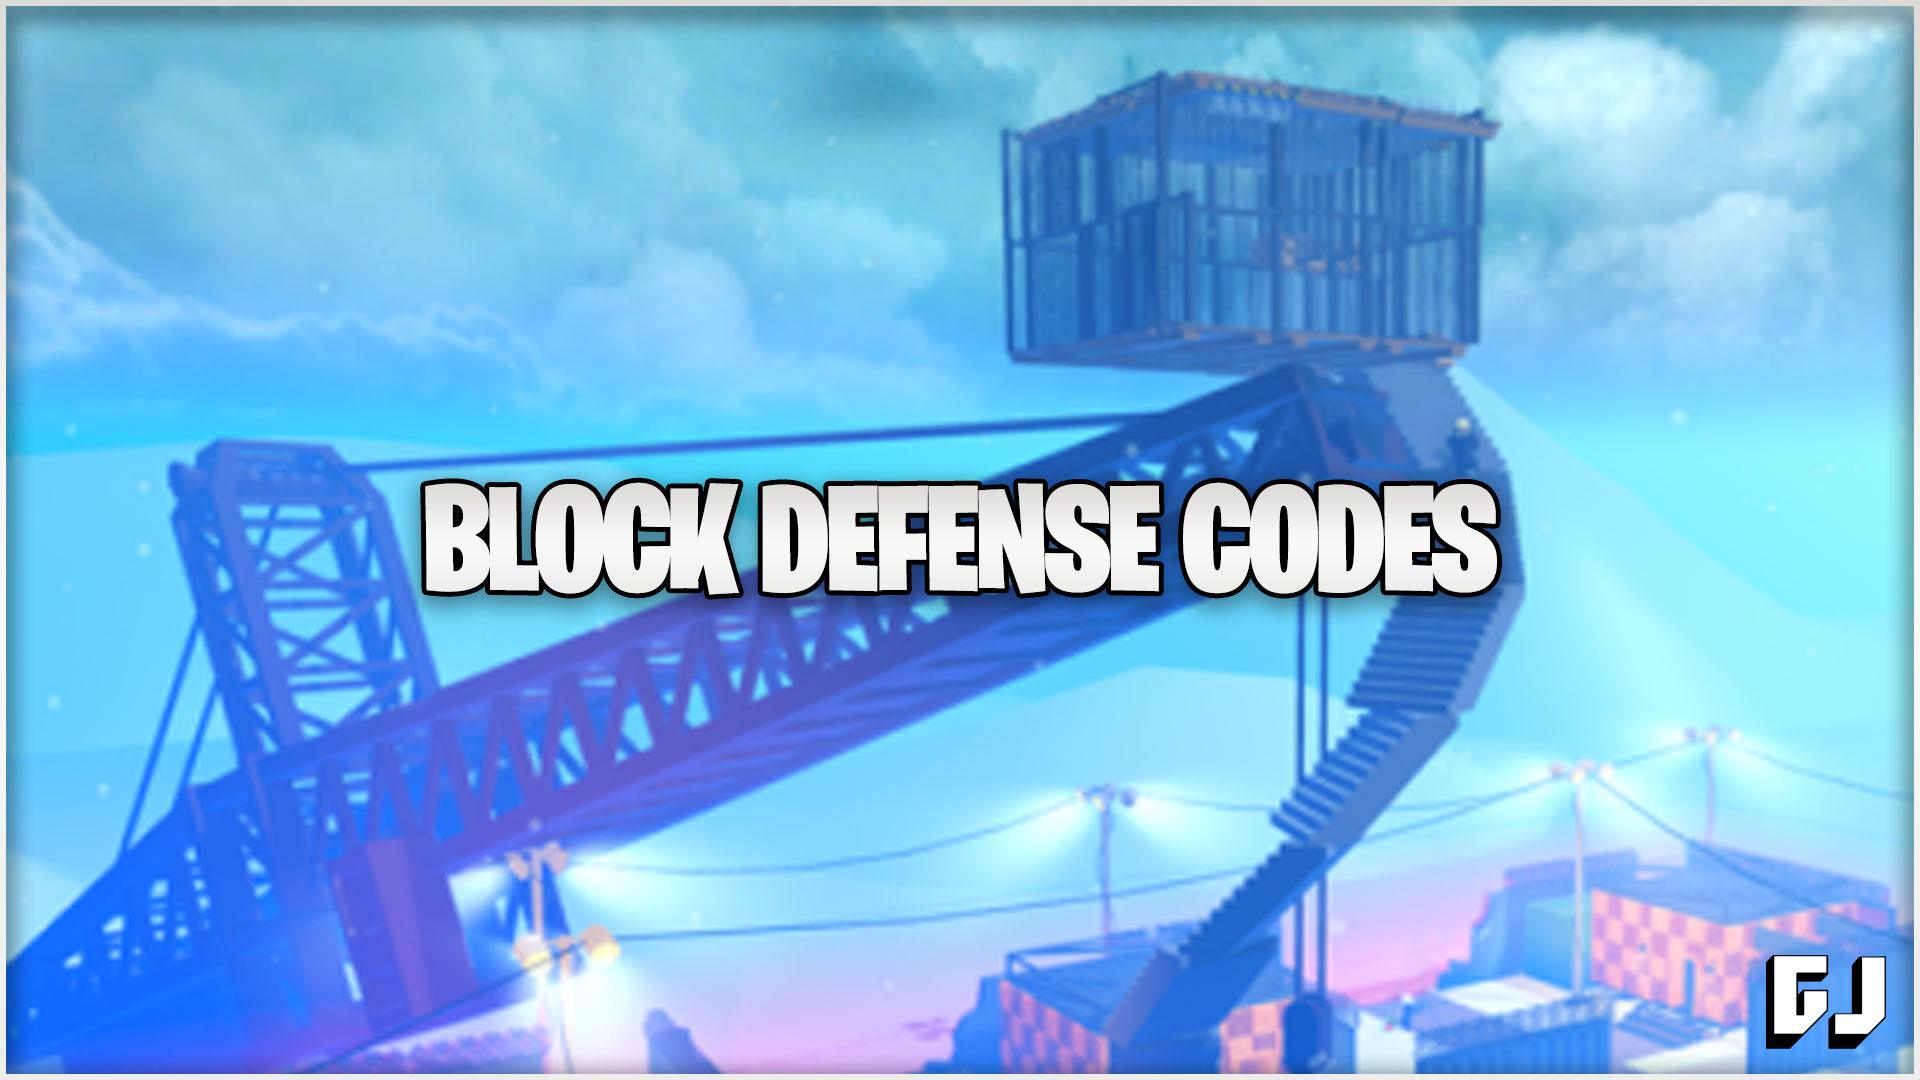 Roblox Block Race Codes